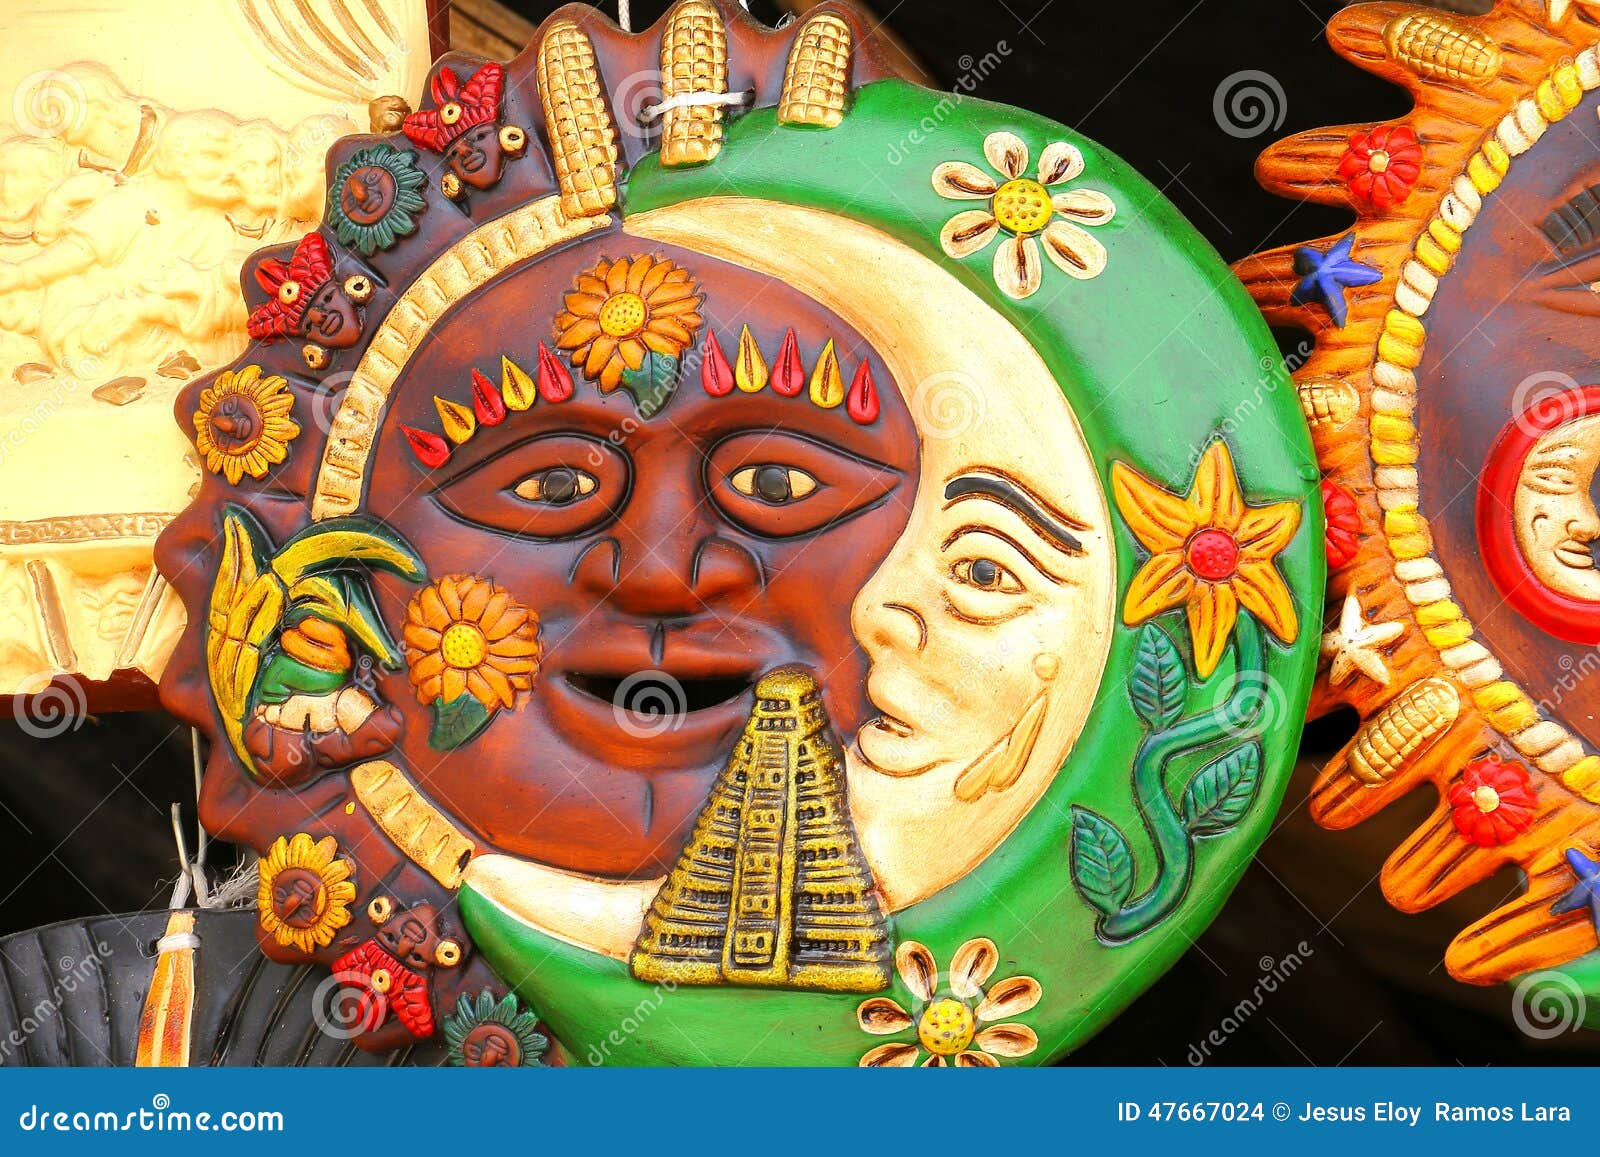 colorful craftsmanship in tajin veracruz, mexico i